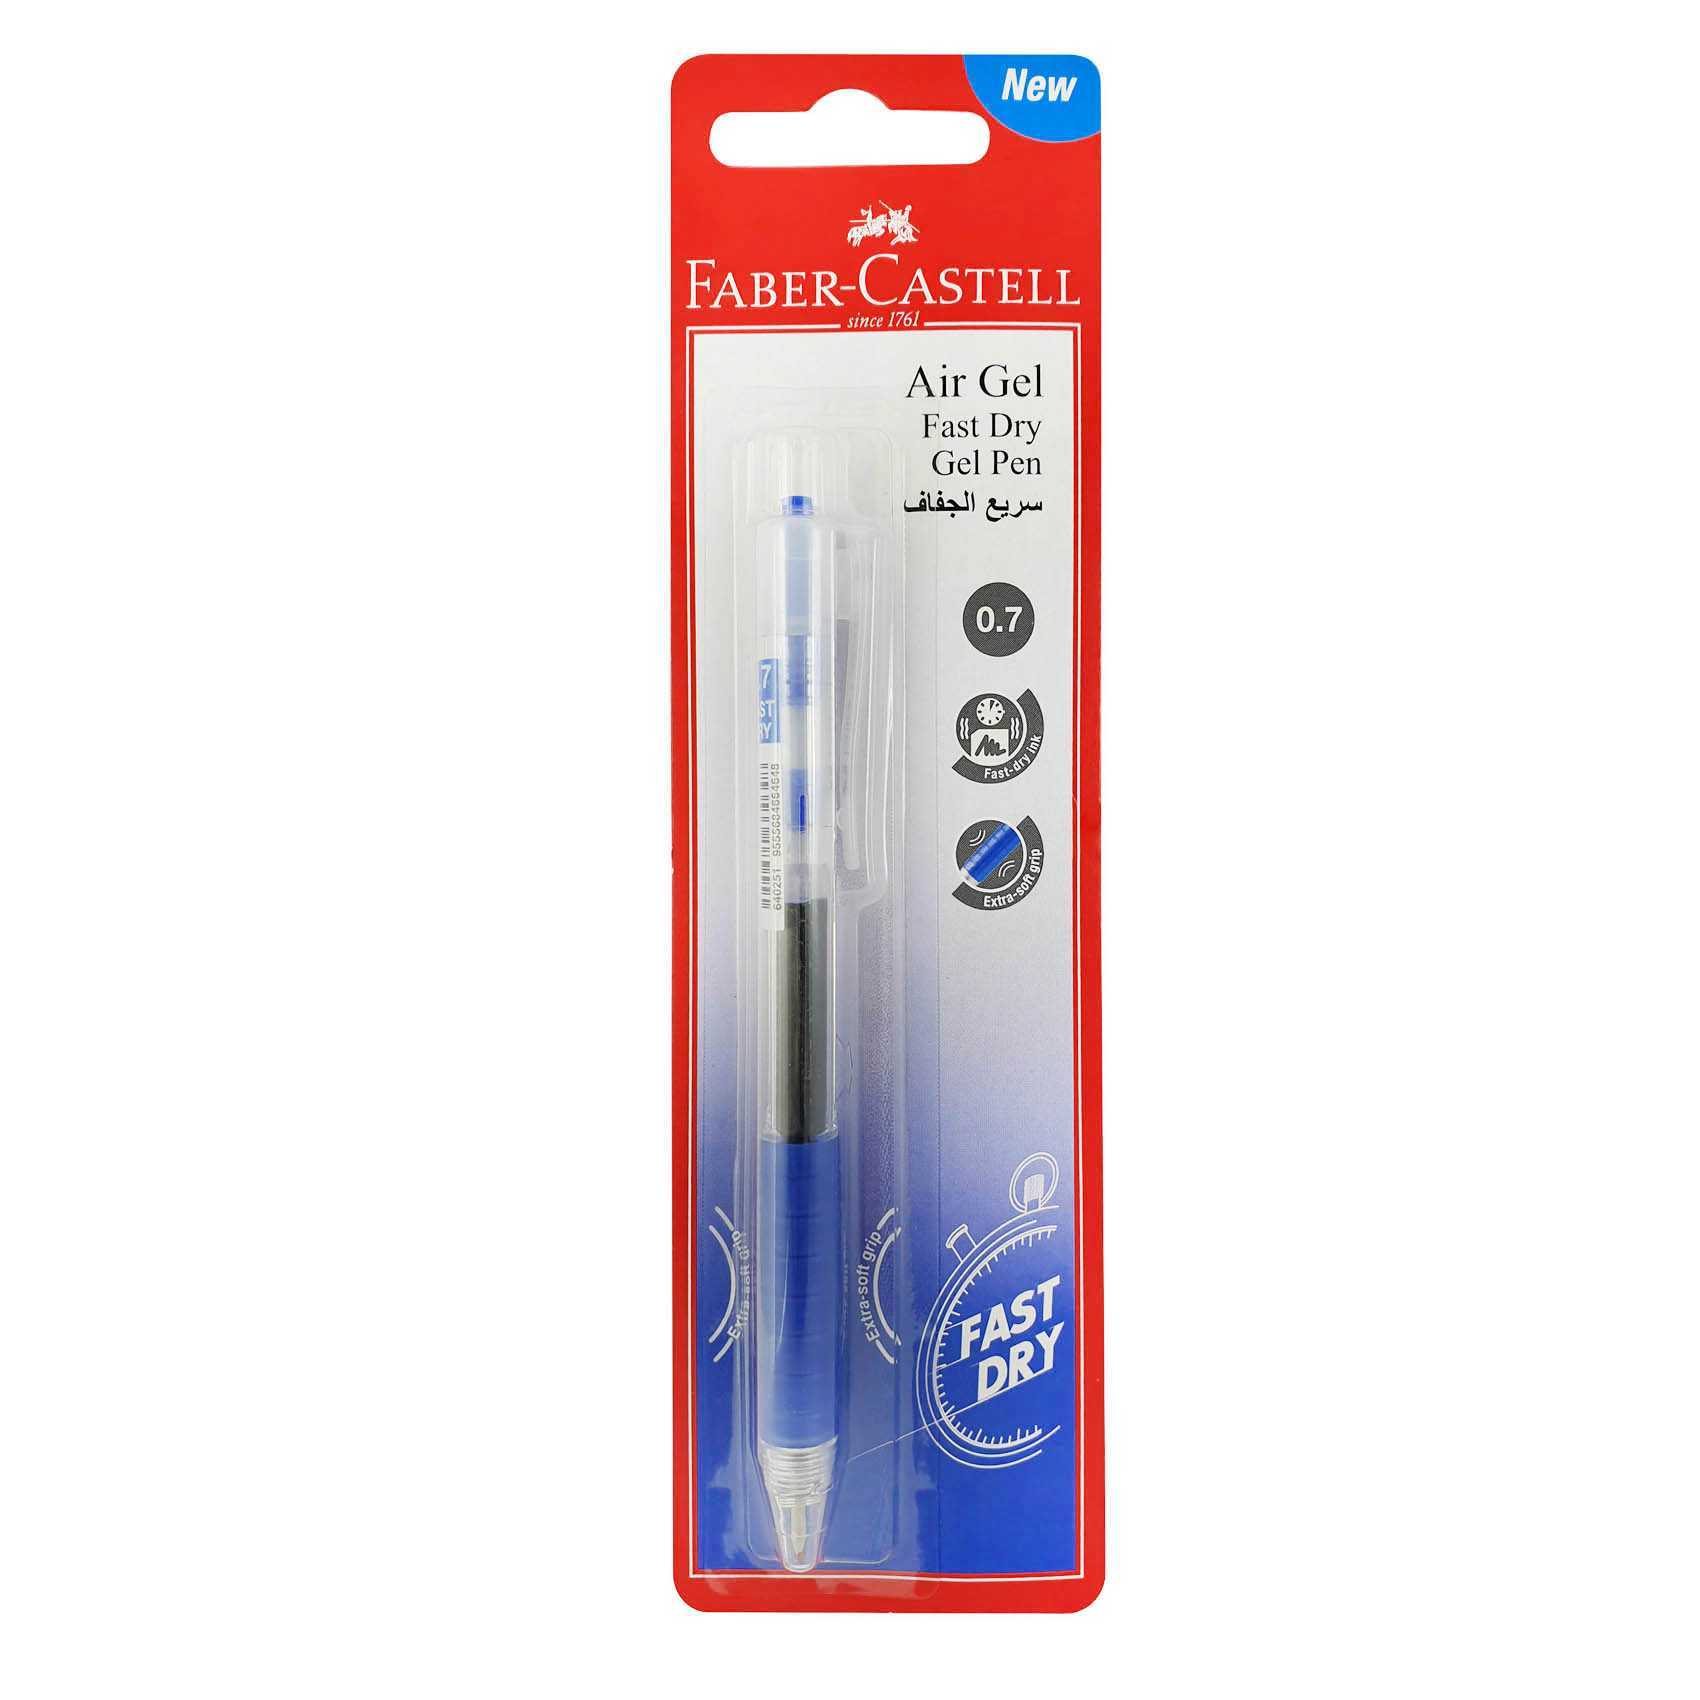 Buy Faber Castell Gel Pen Air Gel 0 7 Blue Pack Of 1 Online Shop Stationery School Supplies On Carrefour Uae